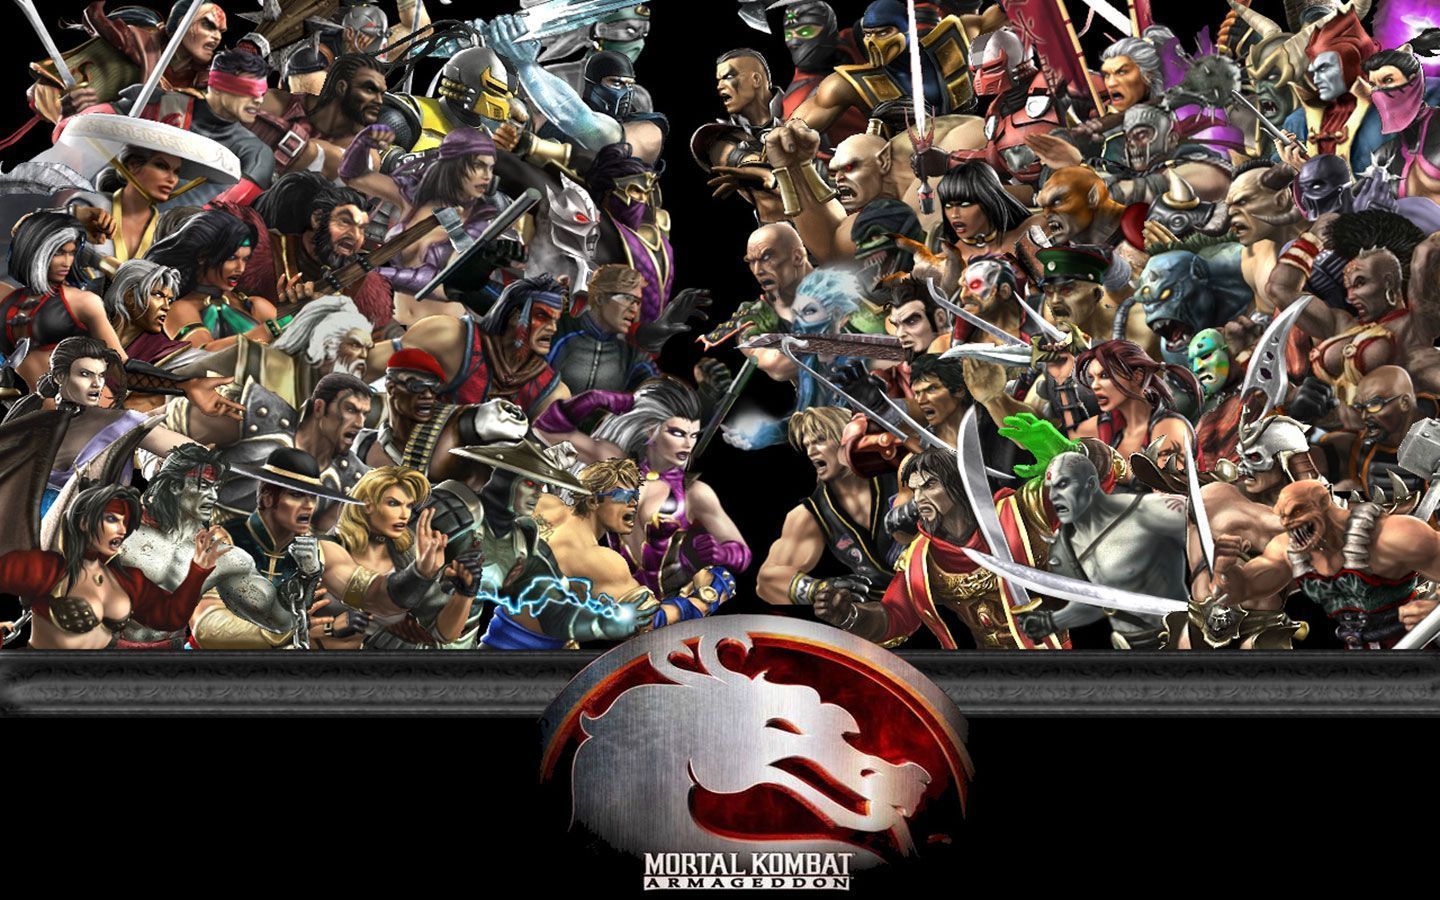 Mortal Kombat image MK wallpaper HD wallpaper and background 1440×900 Mortal Kombat Armageddon Wallpaper 50 Wallpa. Mortal kombat, Mortal kombat art, Game art